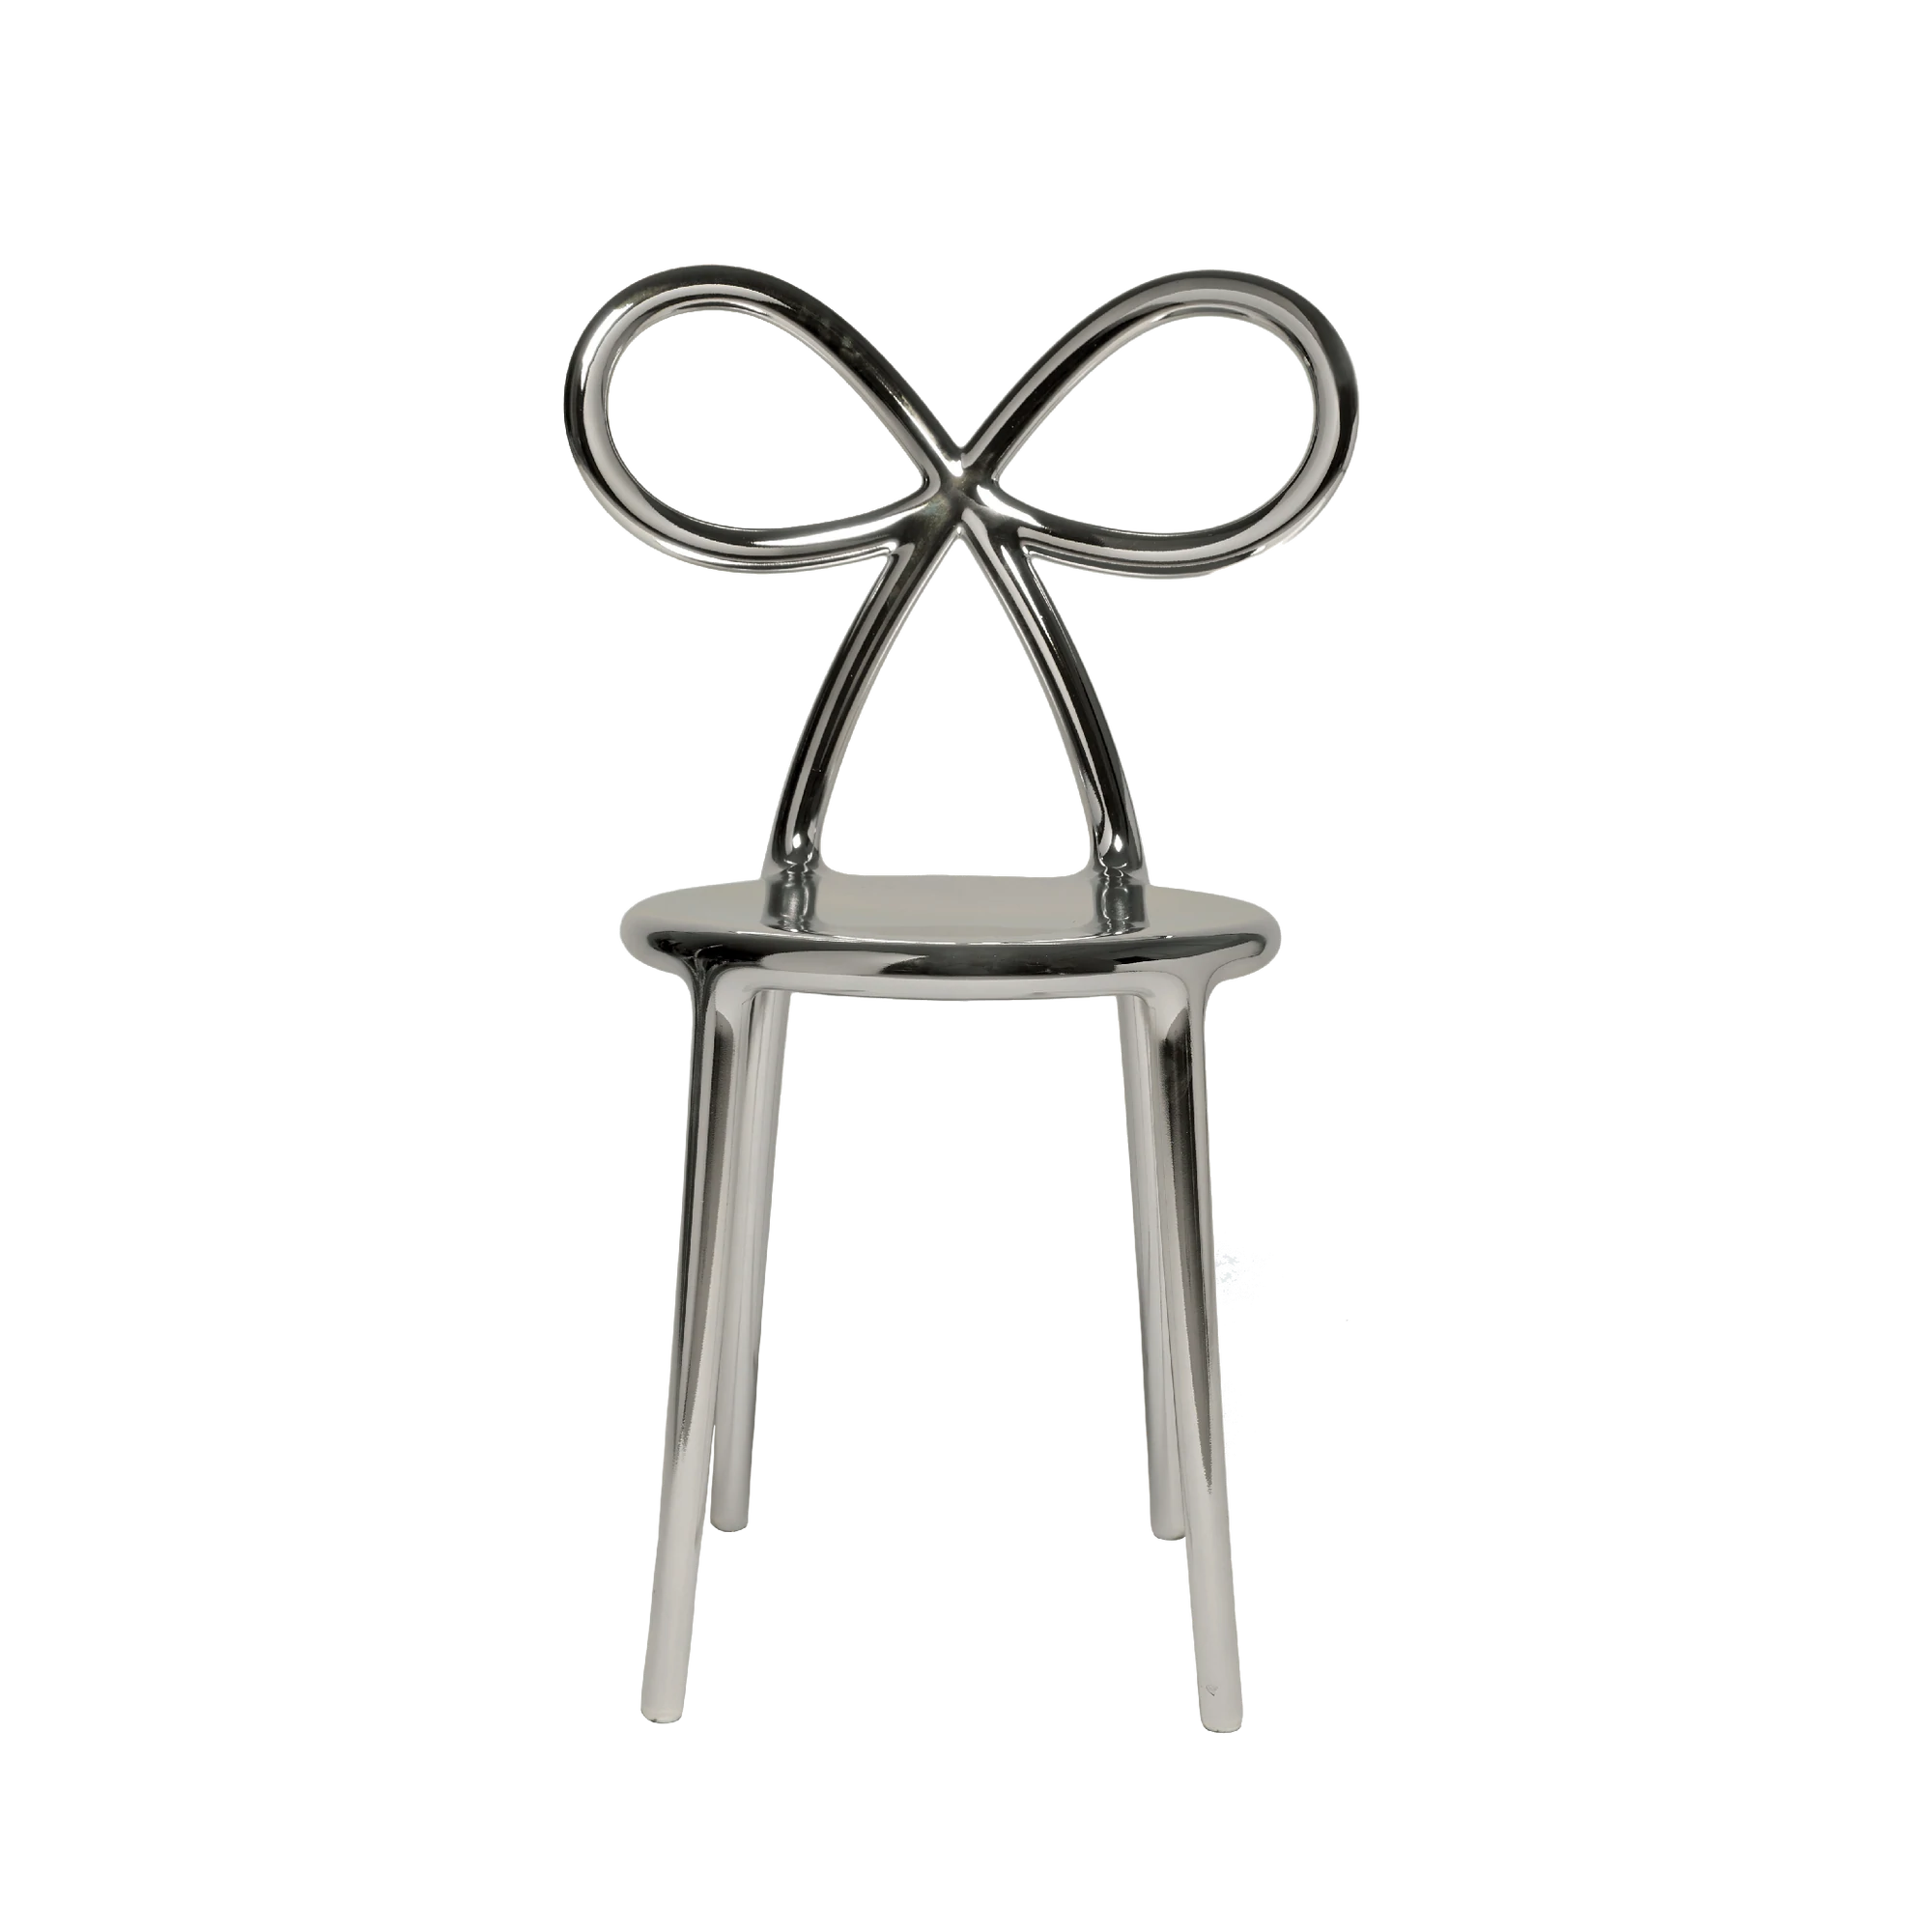 refurbished | Qeeboo Ribbon Chair Metal Finish , Silver